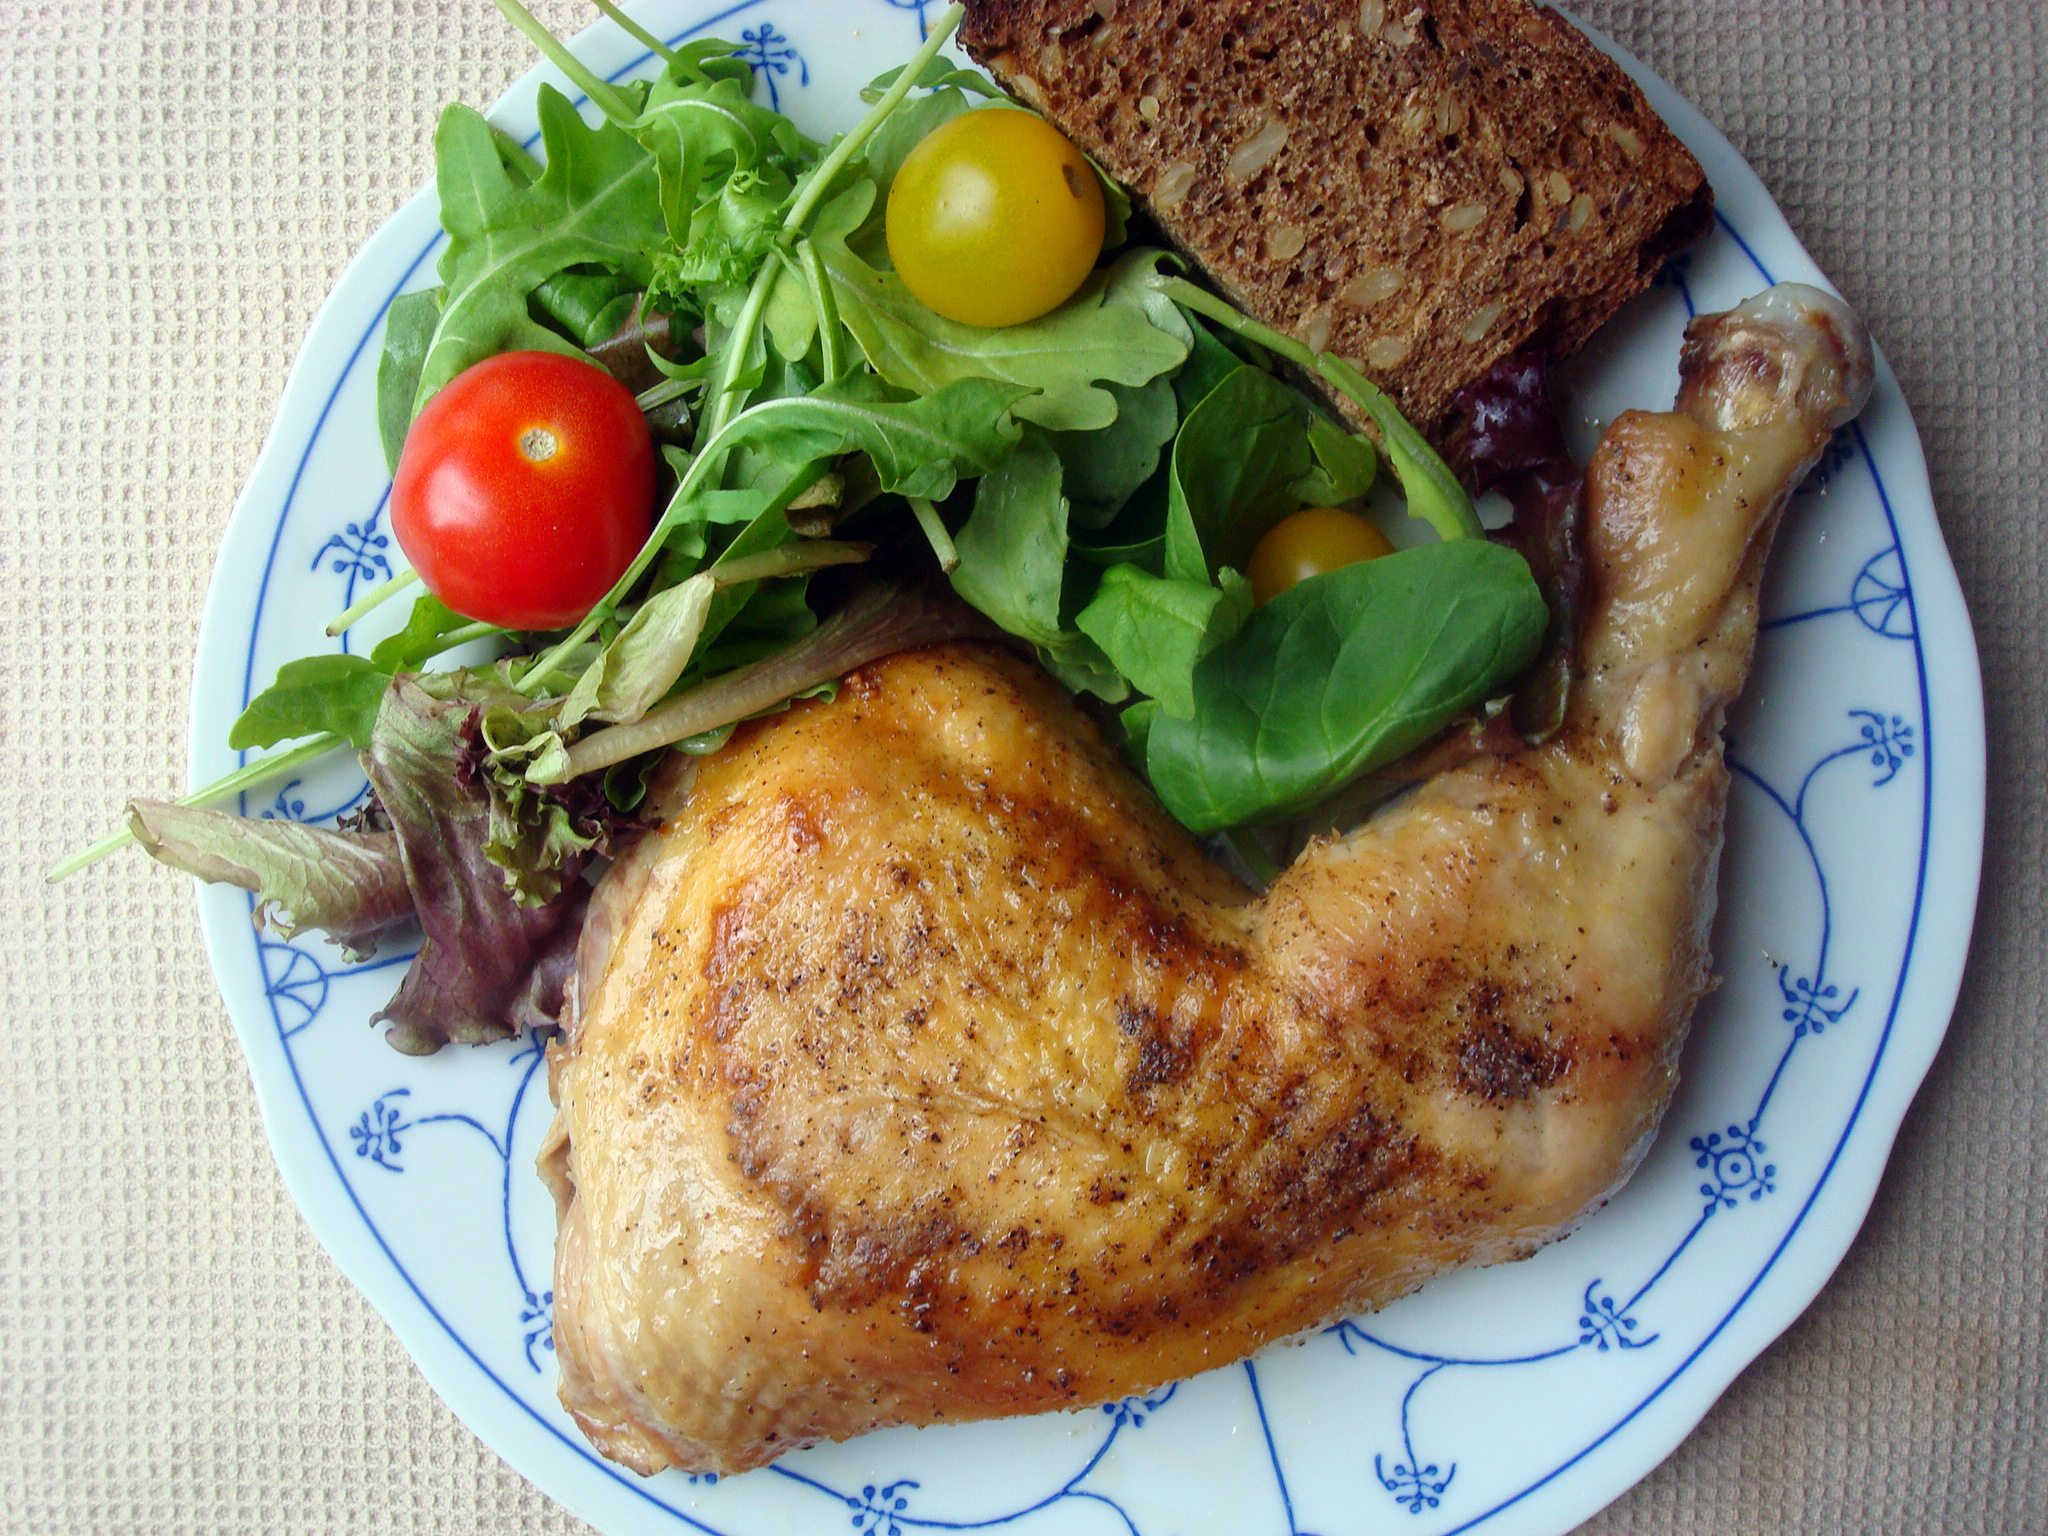 Pan fried chicken leg on plate